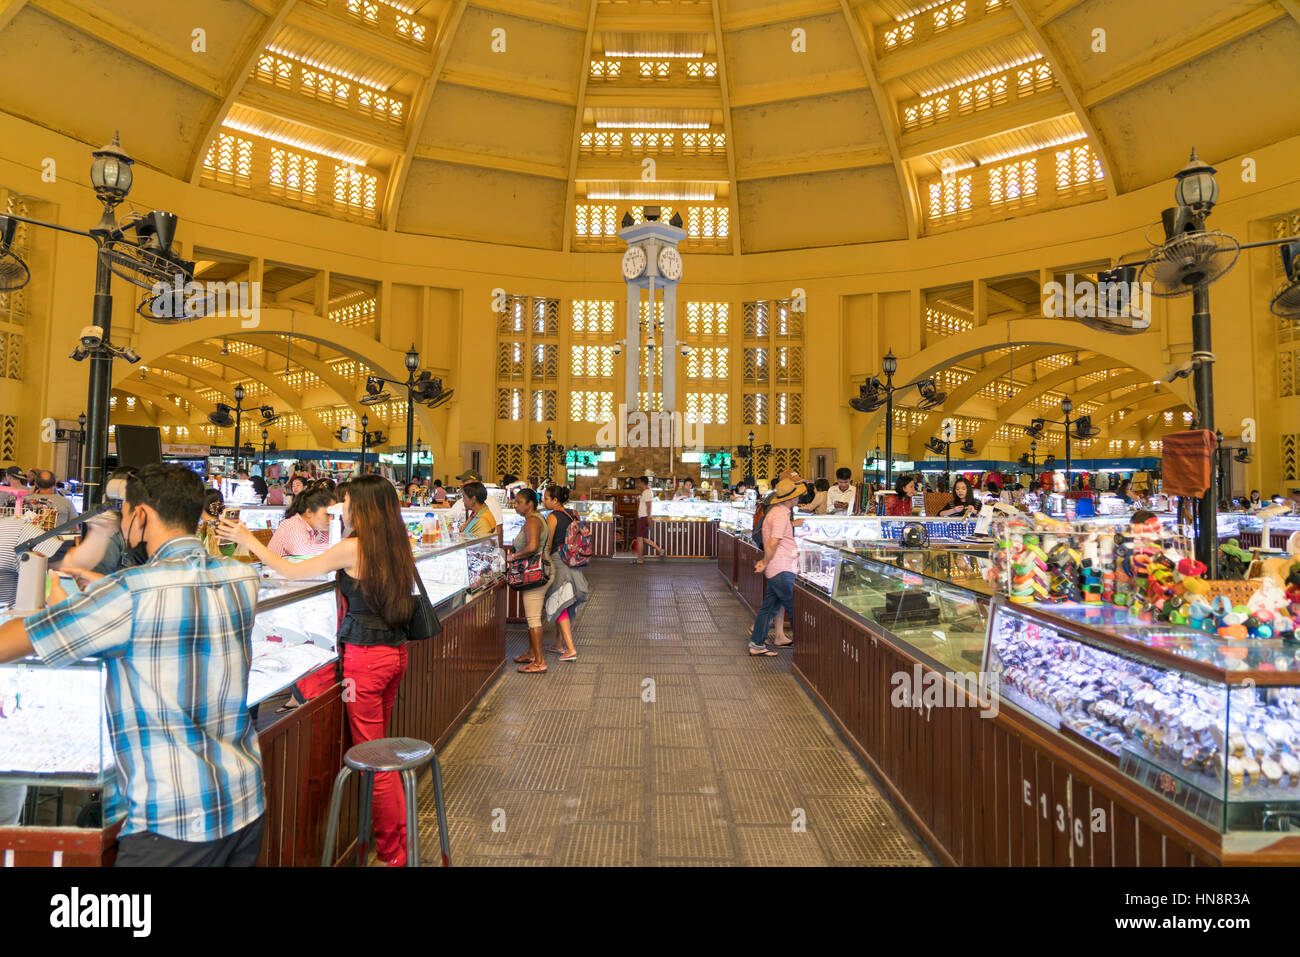 Innenraum des Zentralmarkt,  Phnom Penh, Kambodscha, Asien  |   Central Market interior,  Phnom Penh, Cambodia, Asia Stock Photo